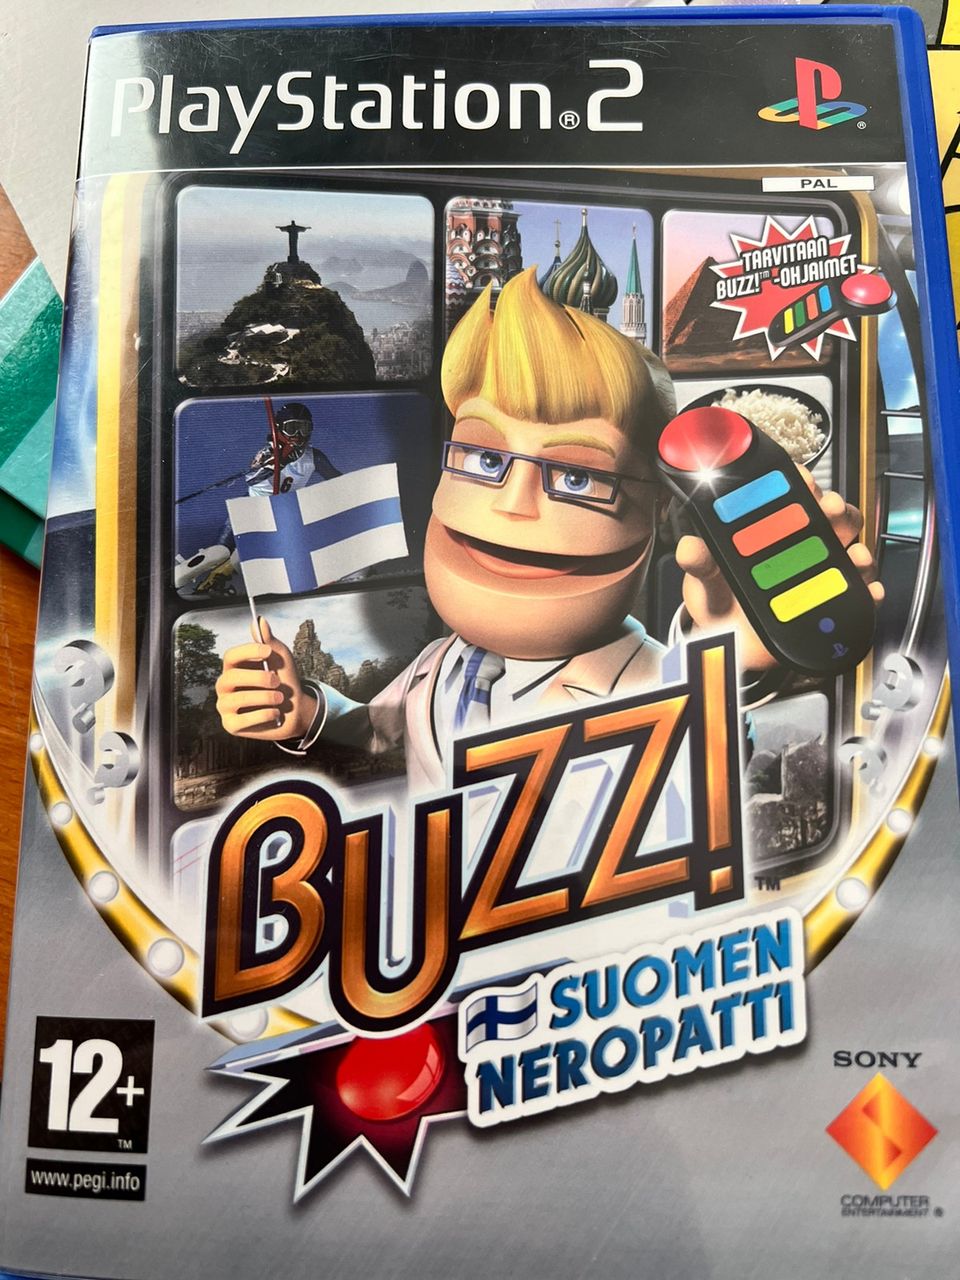 Playstation 2 Buzz! Suomen neropatti -peli